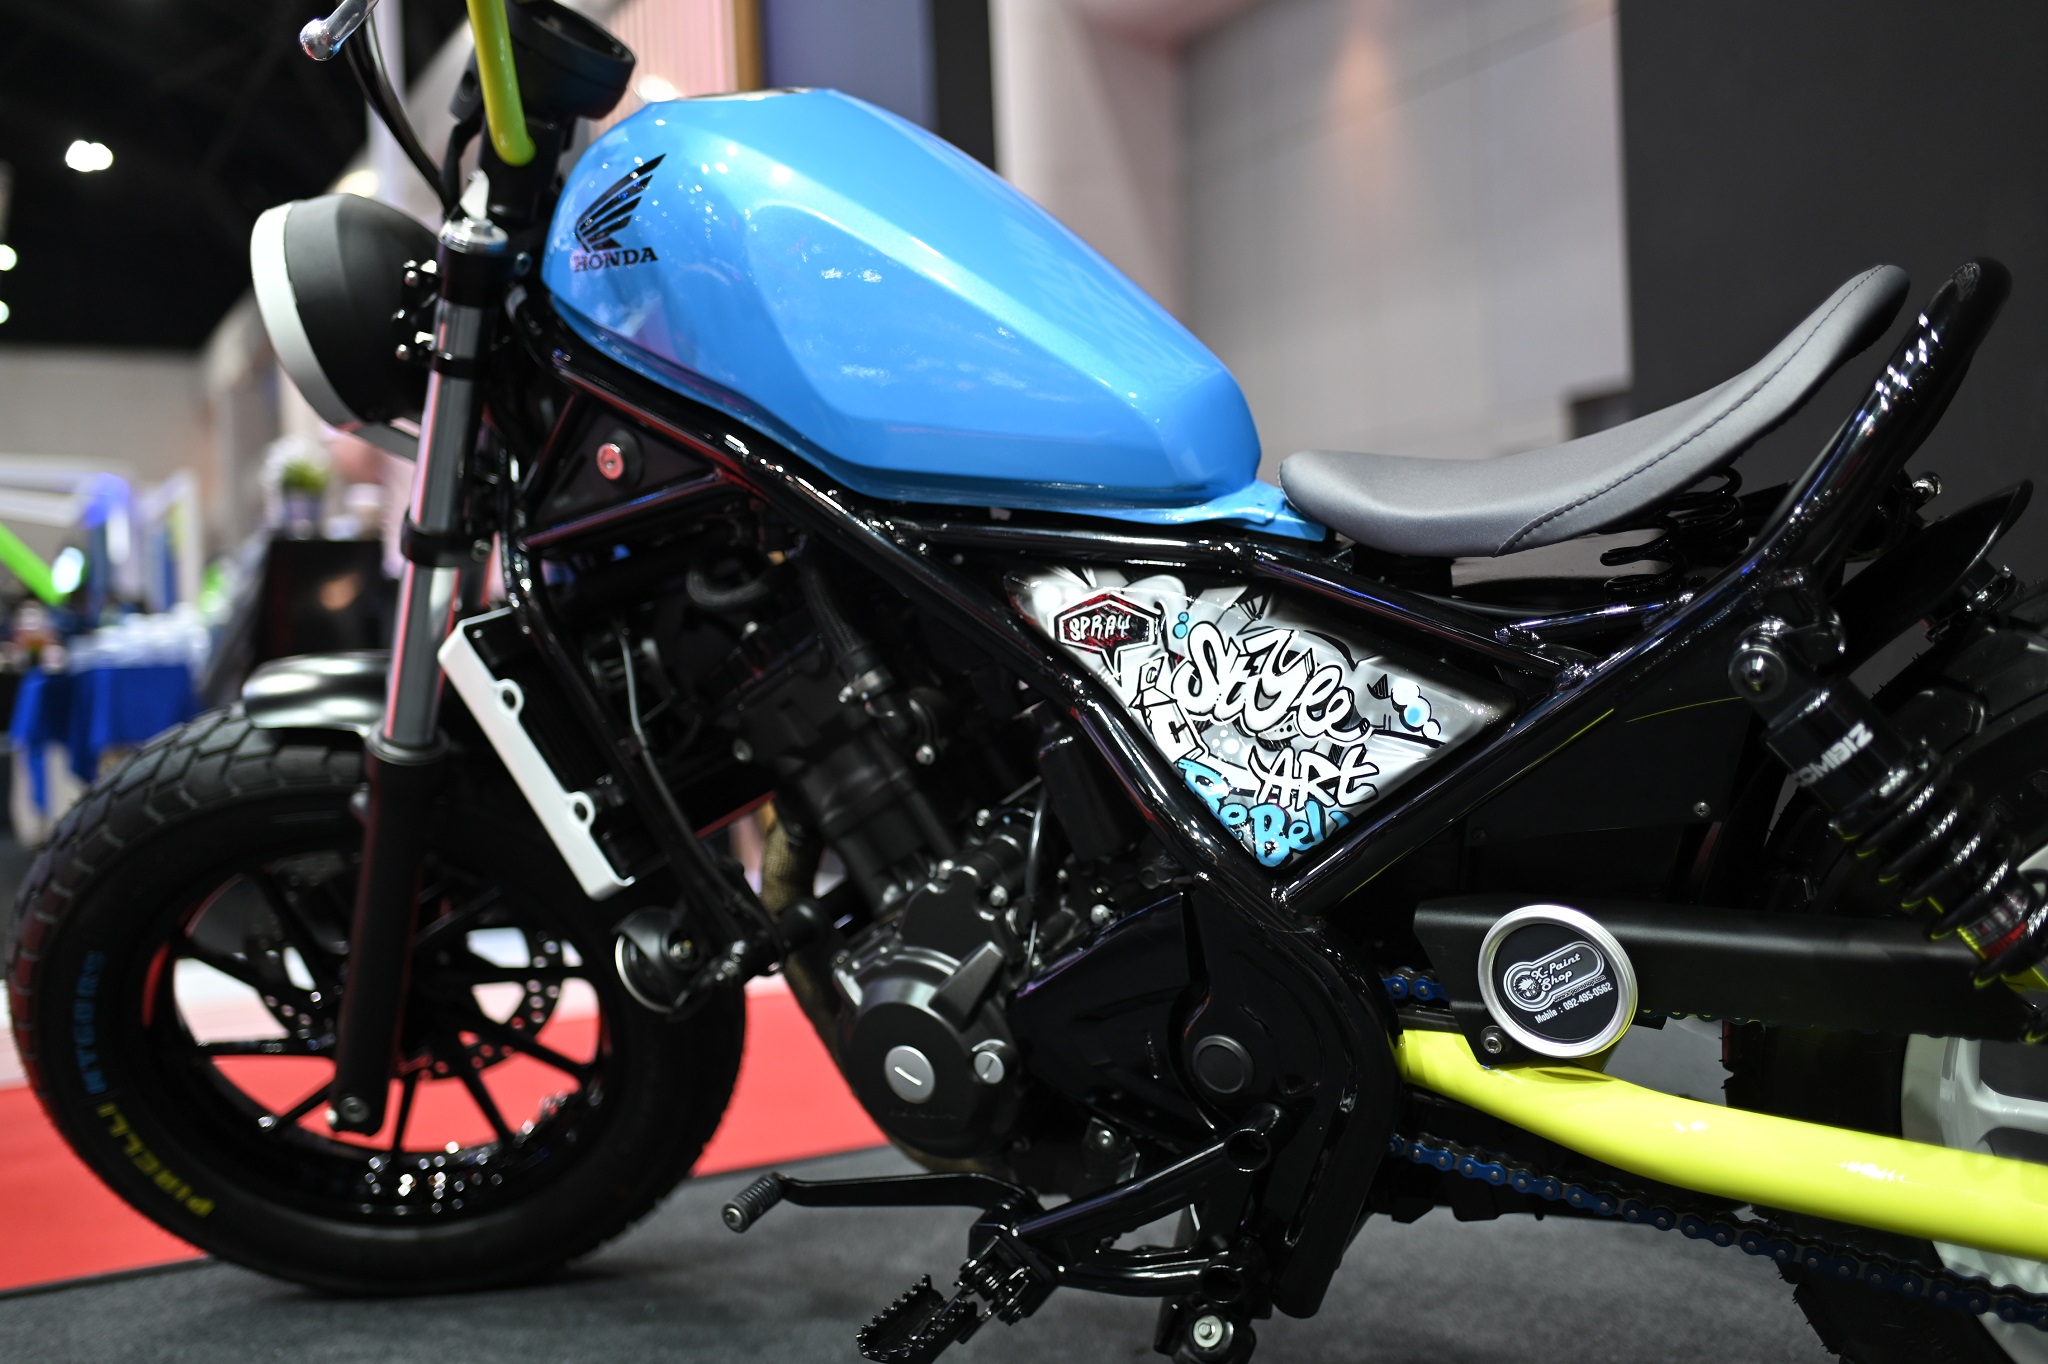 IAM_3707 ไบค์เกอร์รุ่นใหญ่ใจถึง พร้อมรับโปรเด็ดโซน Bigbike บูท Honda ในงาน Motor Show 2019 - IAM 3707